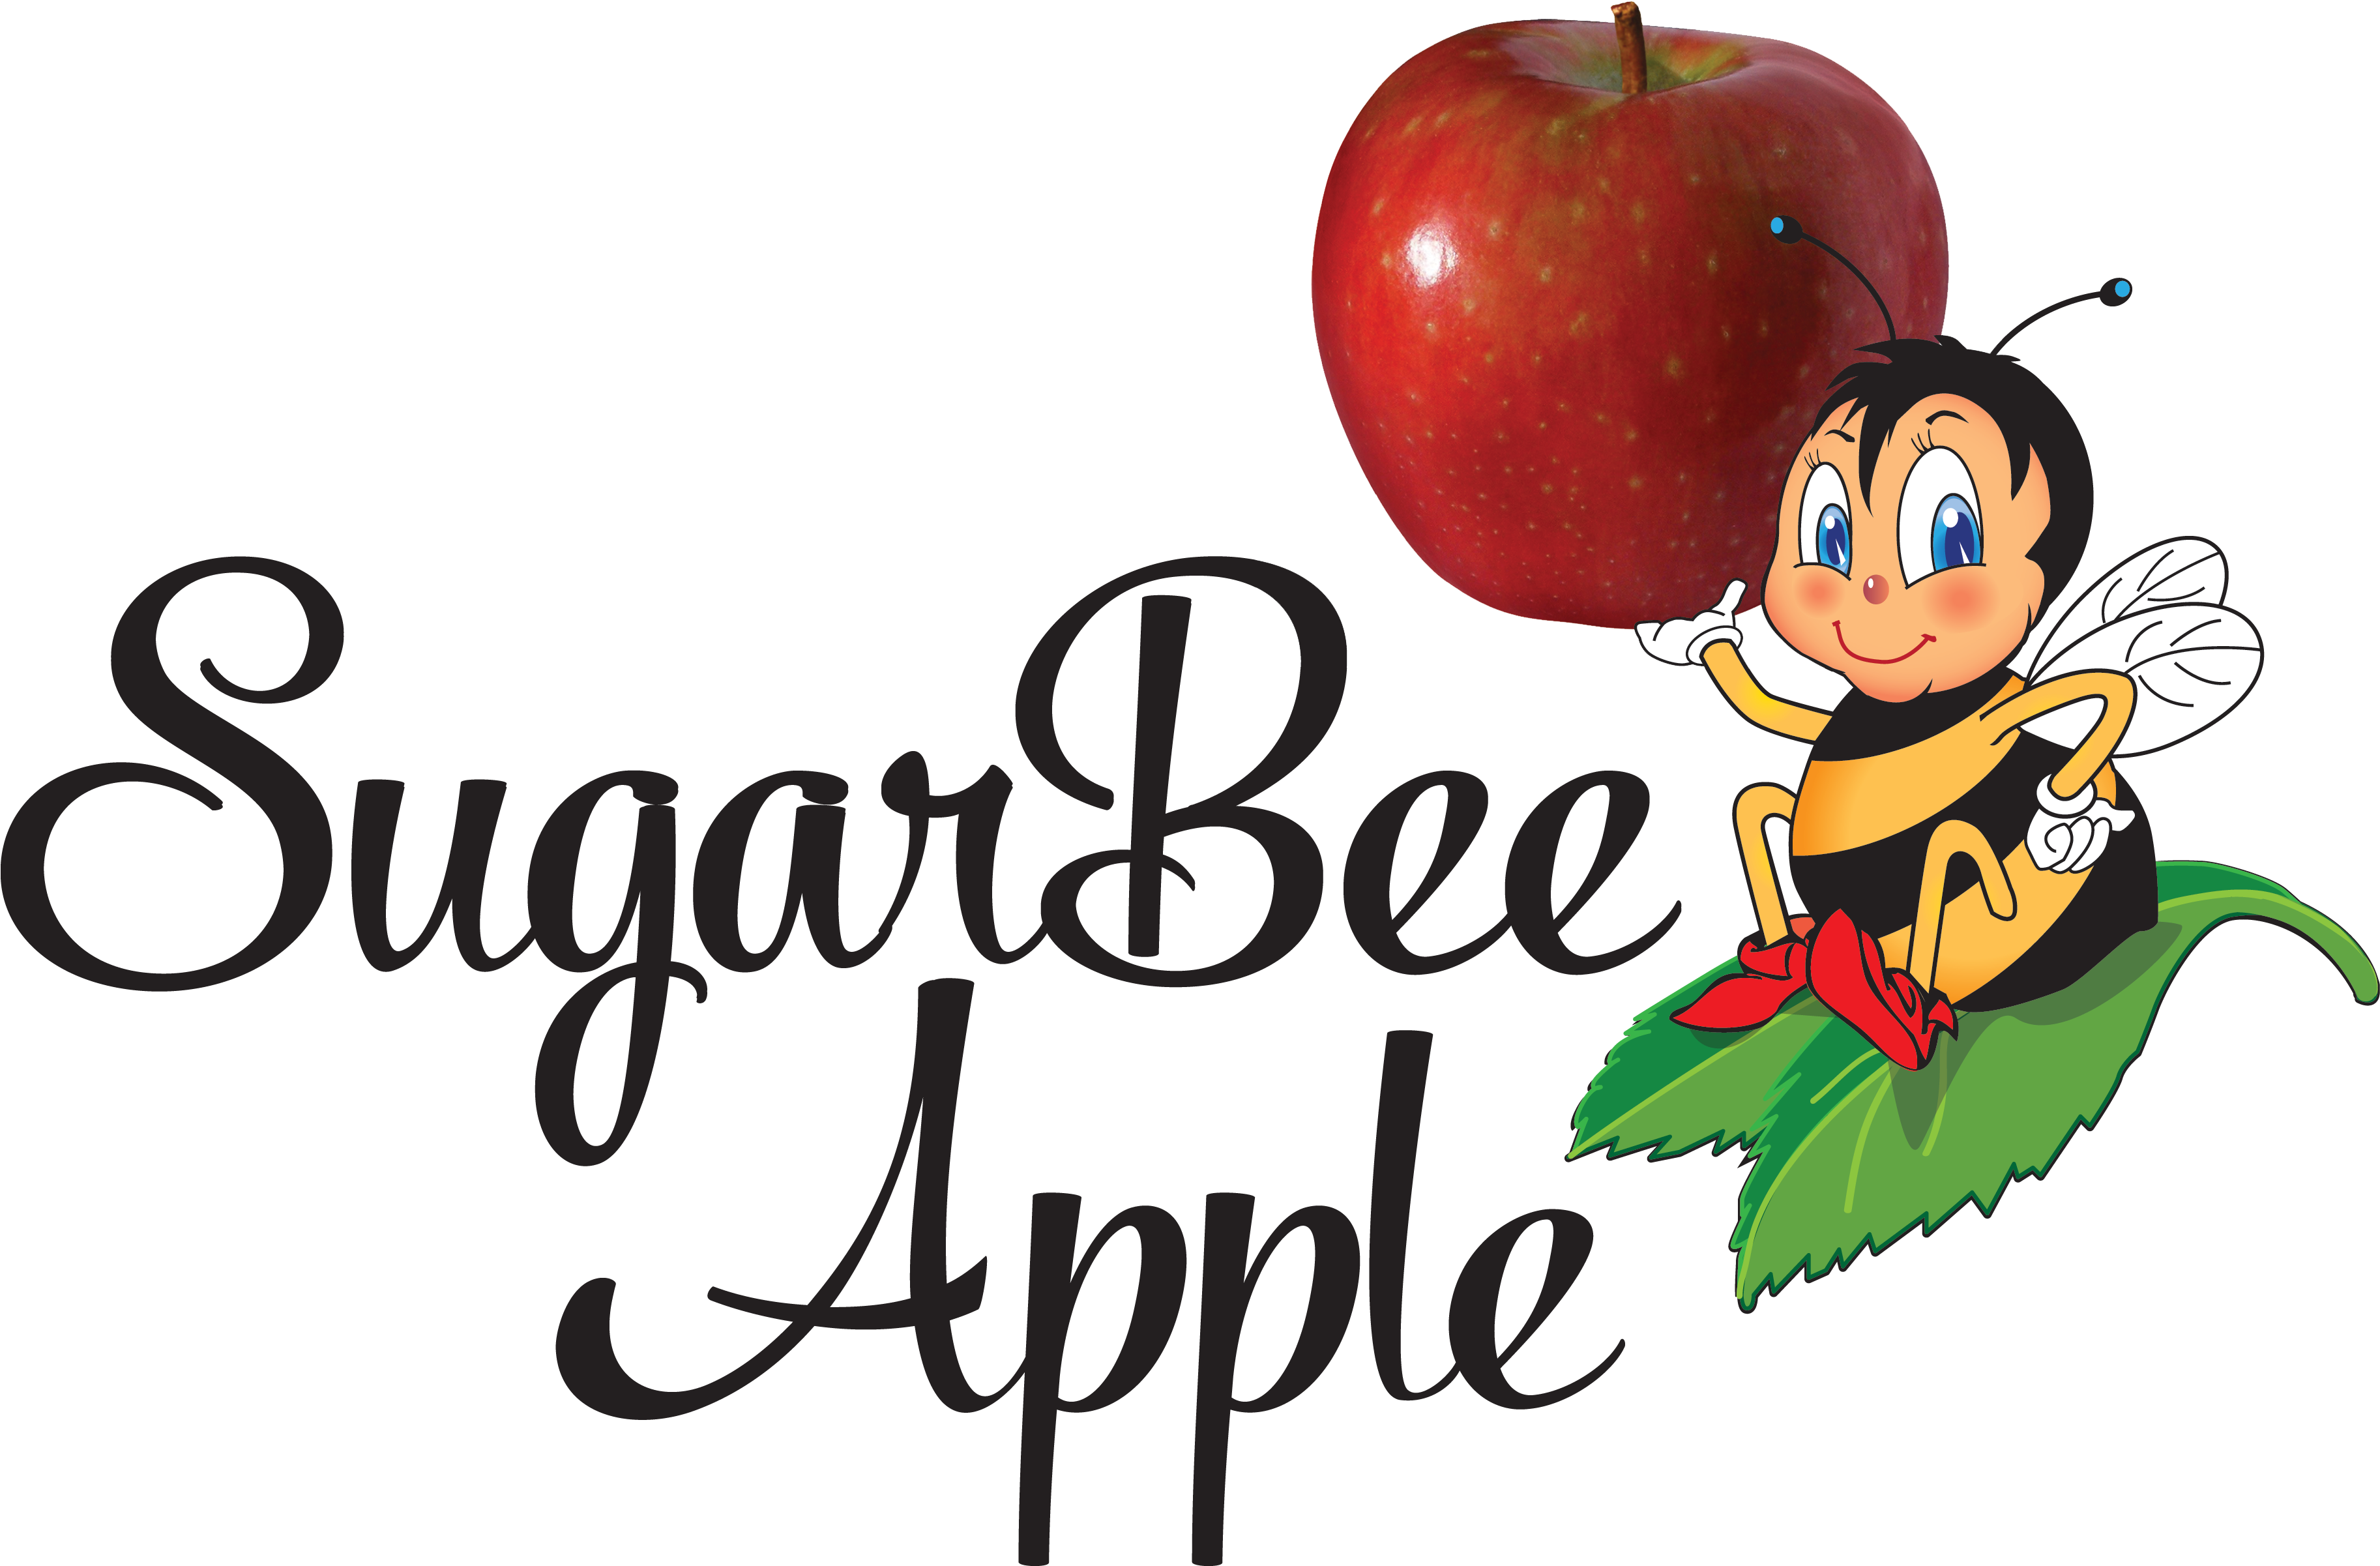 Home - Sugar Bee Apple (3650x2440)